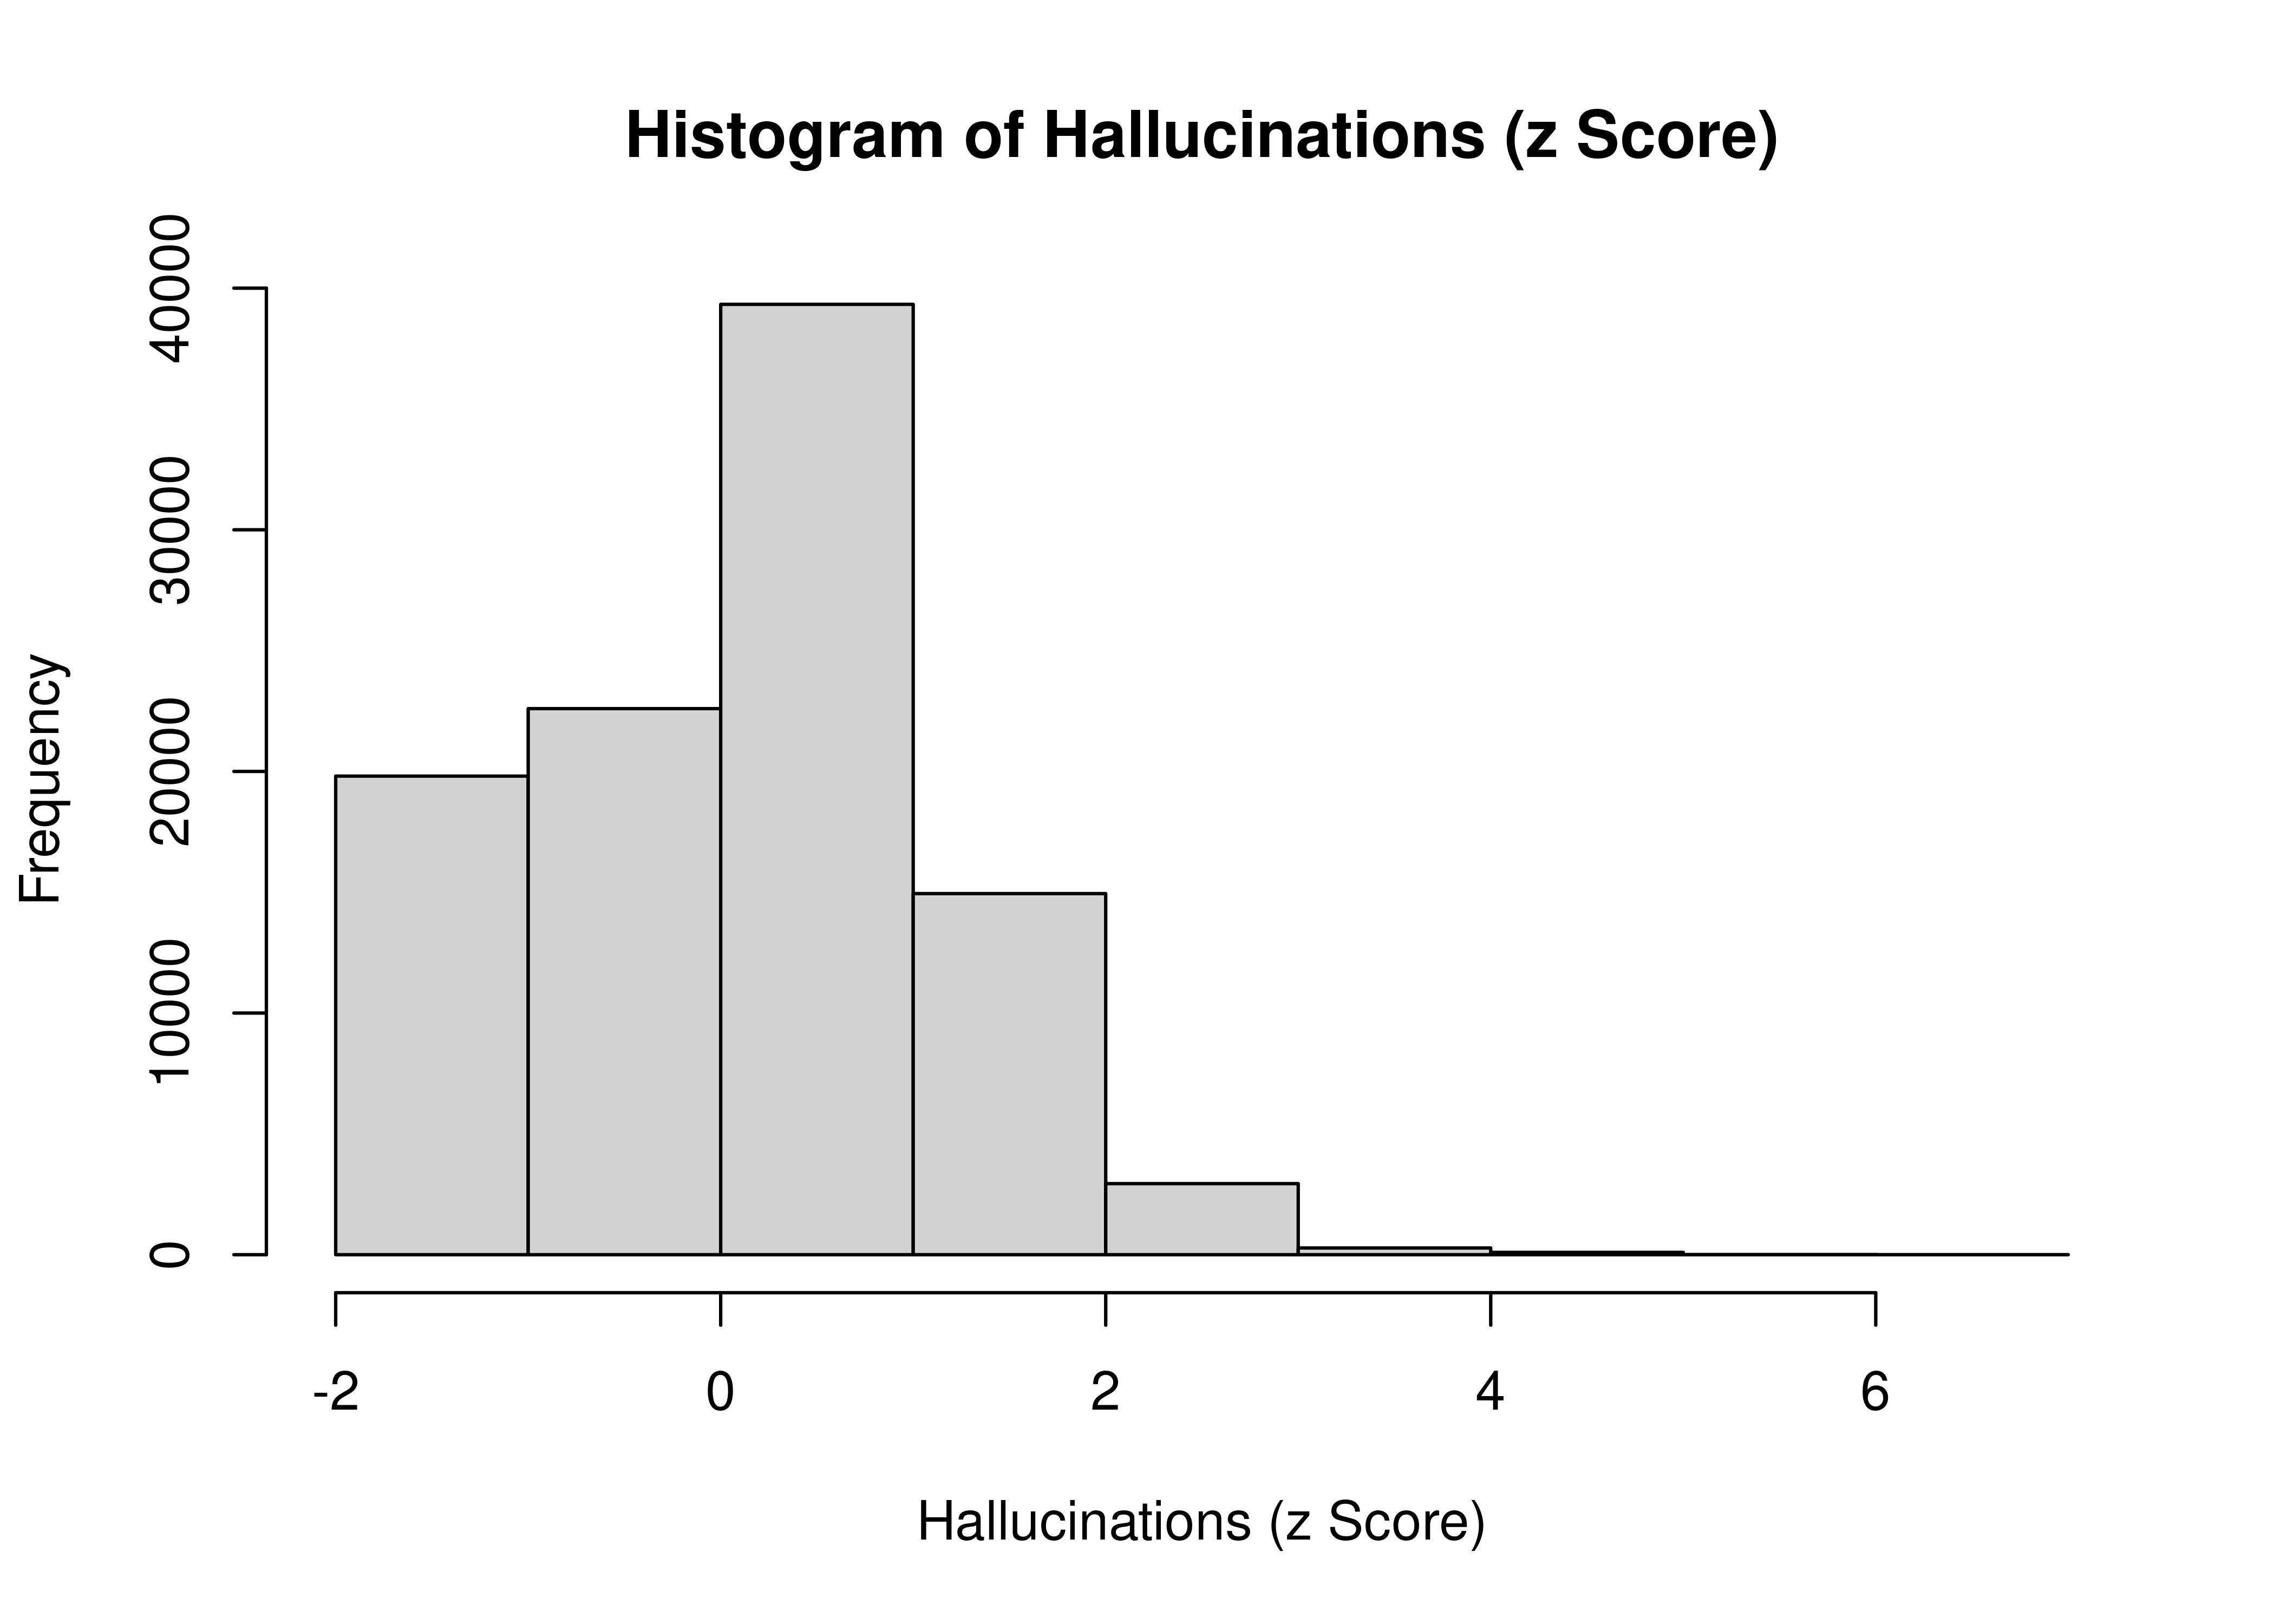 Histogram of Hallucinations (z Score).